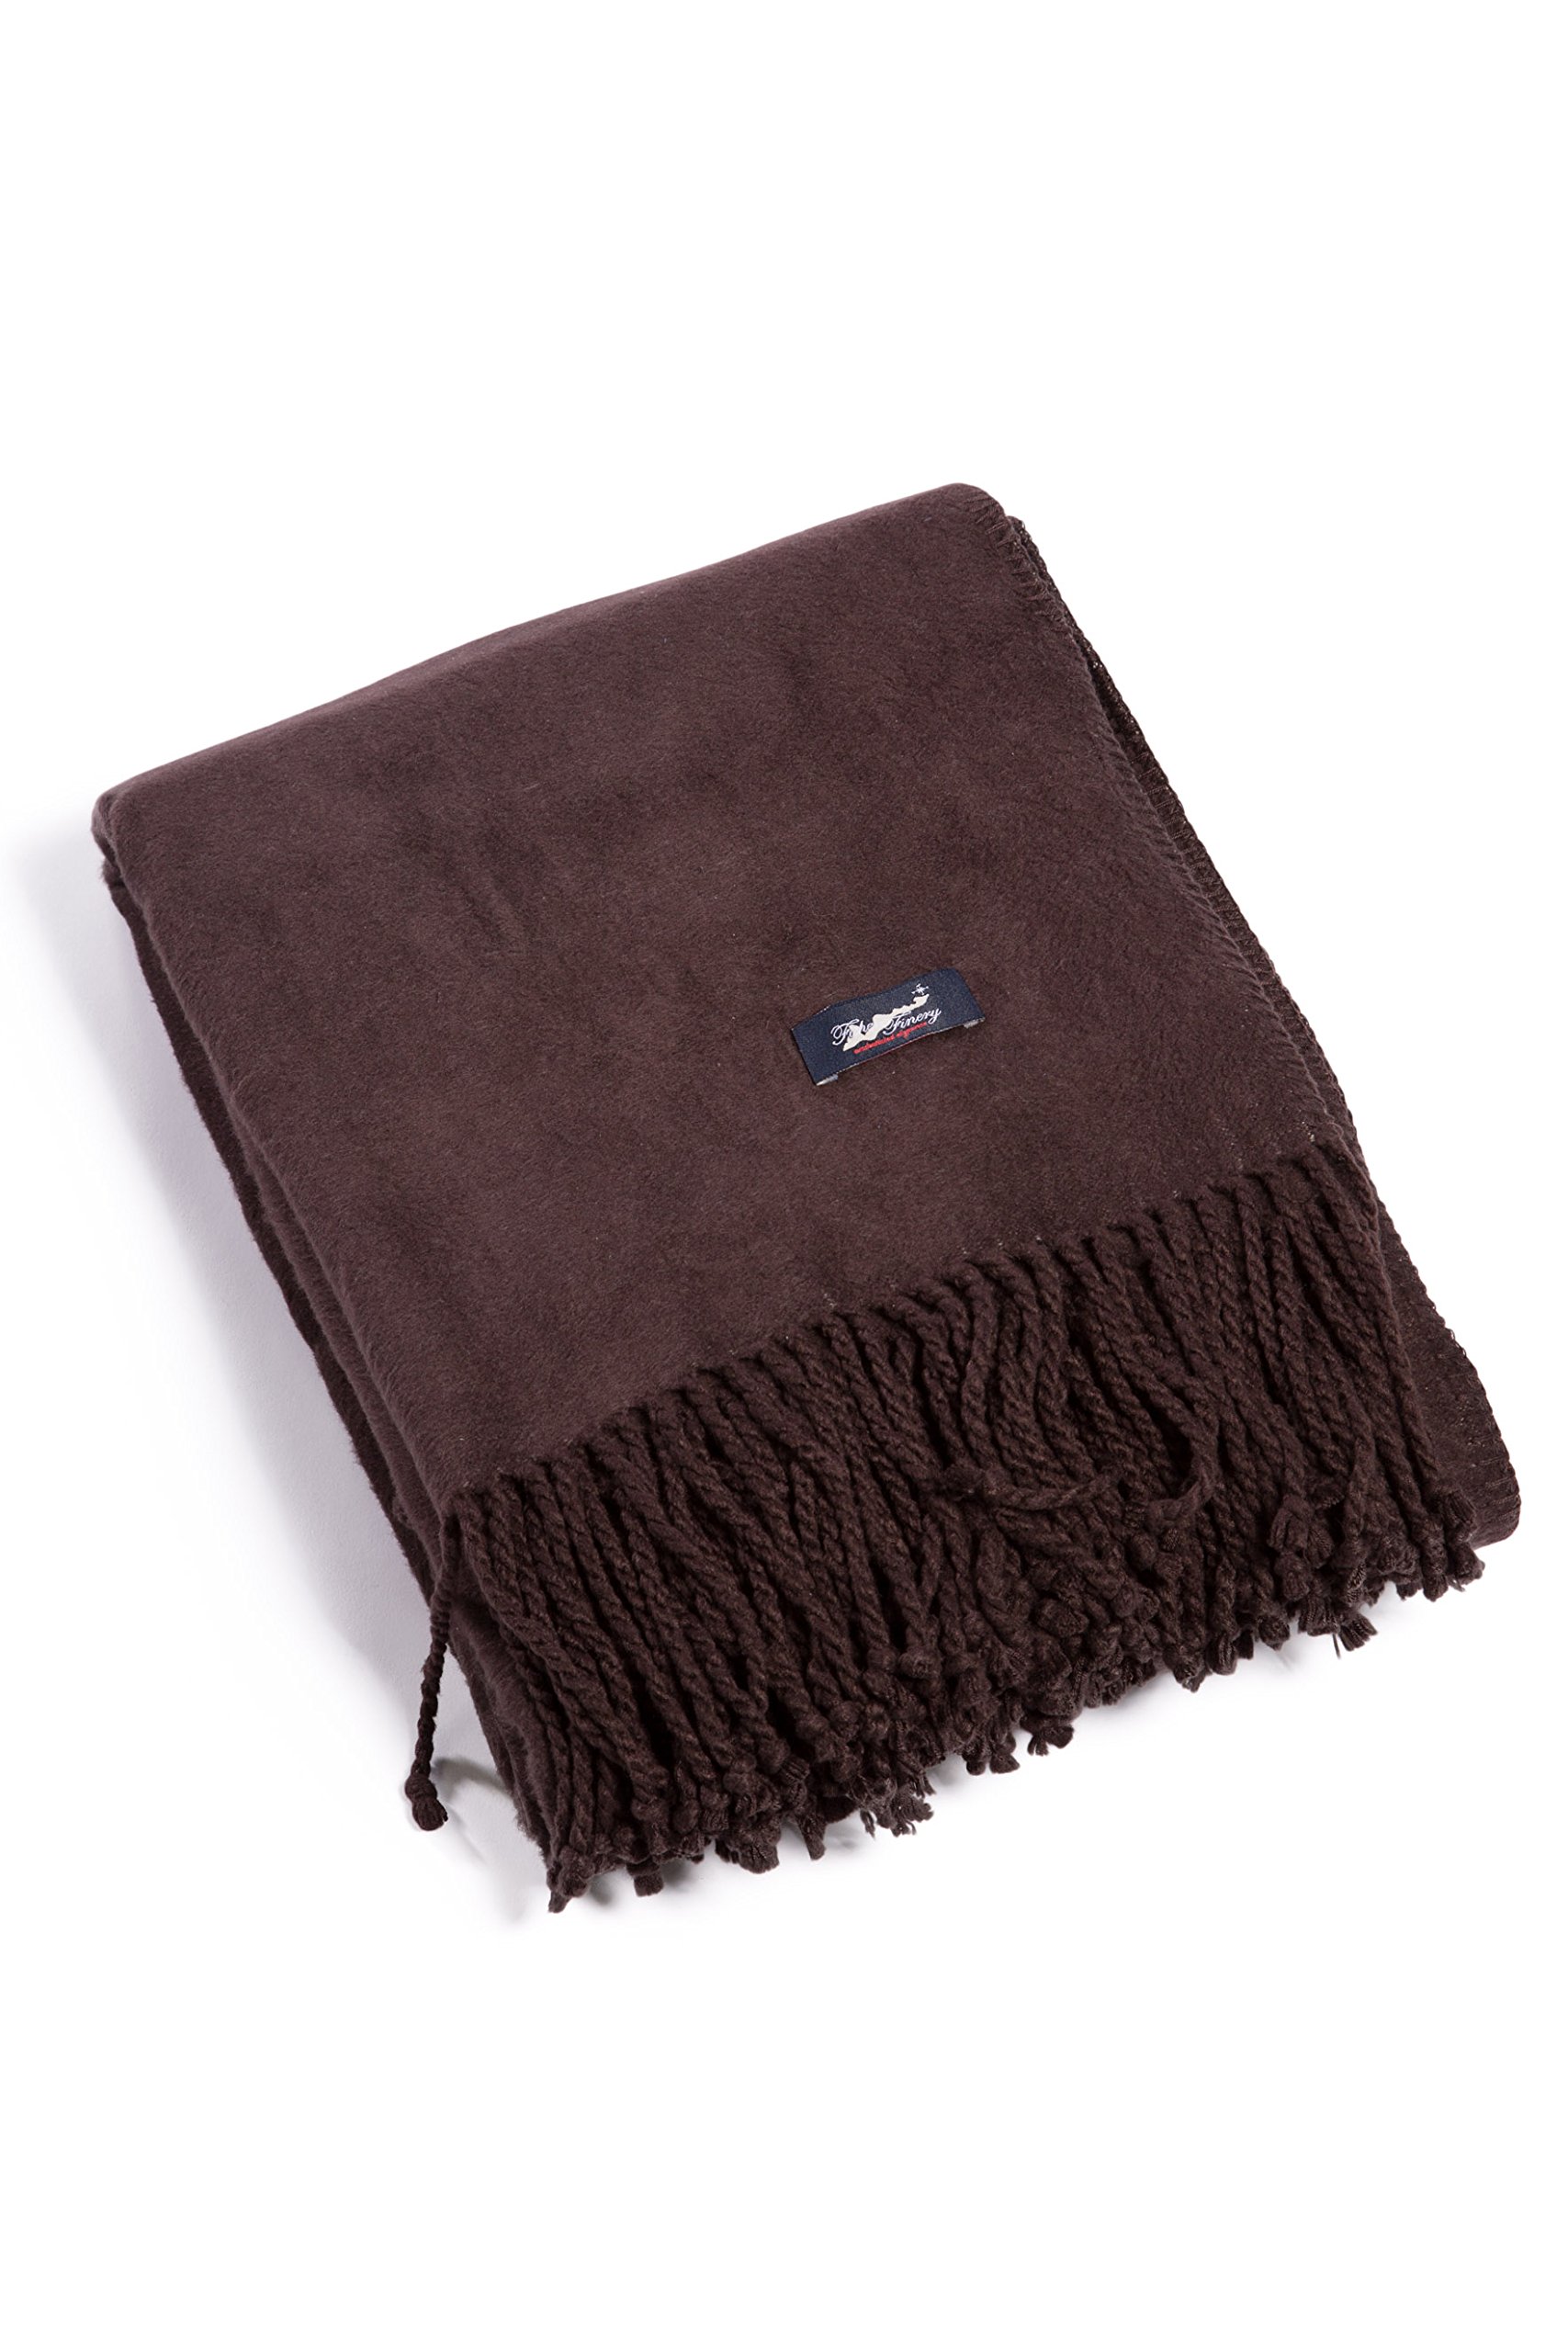 Fishers Finery Micro Velvet Plush Throw Fleece Blanket; Gift Box Included (Chocolate)